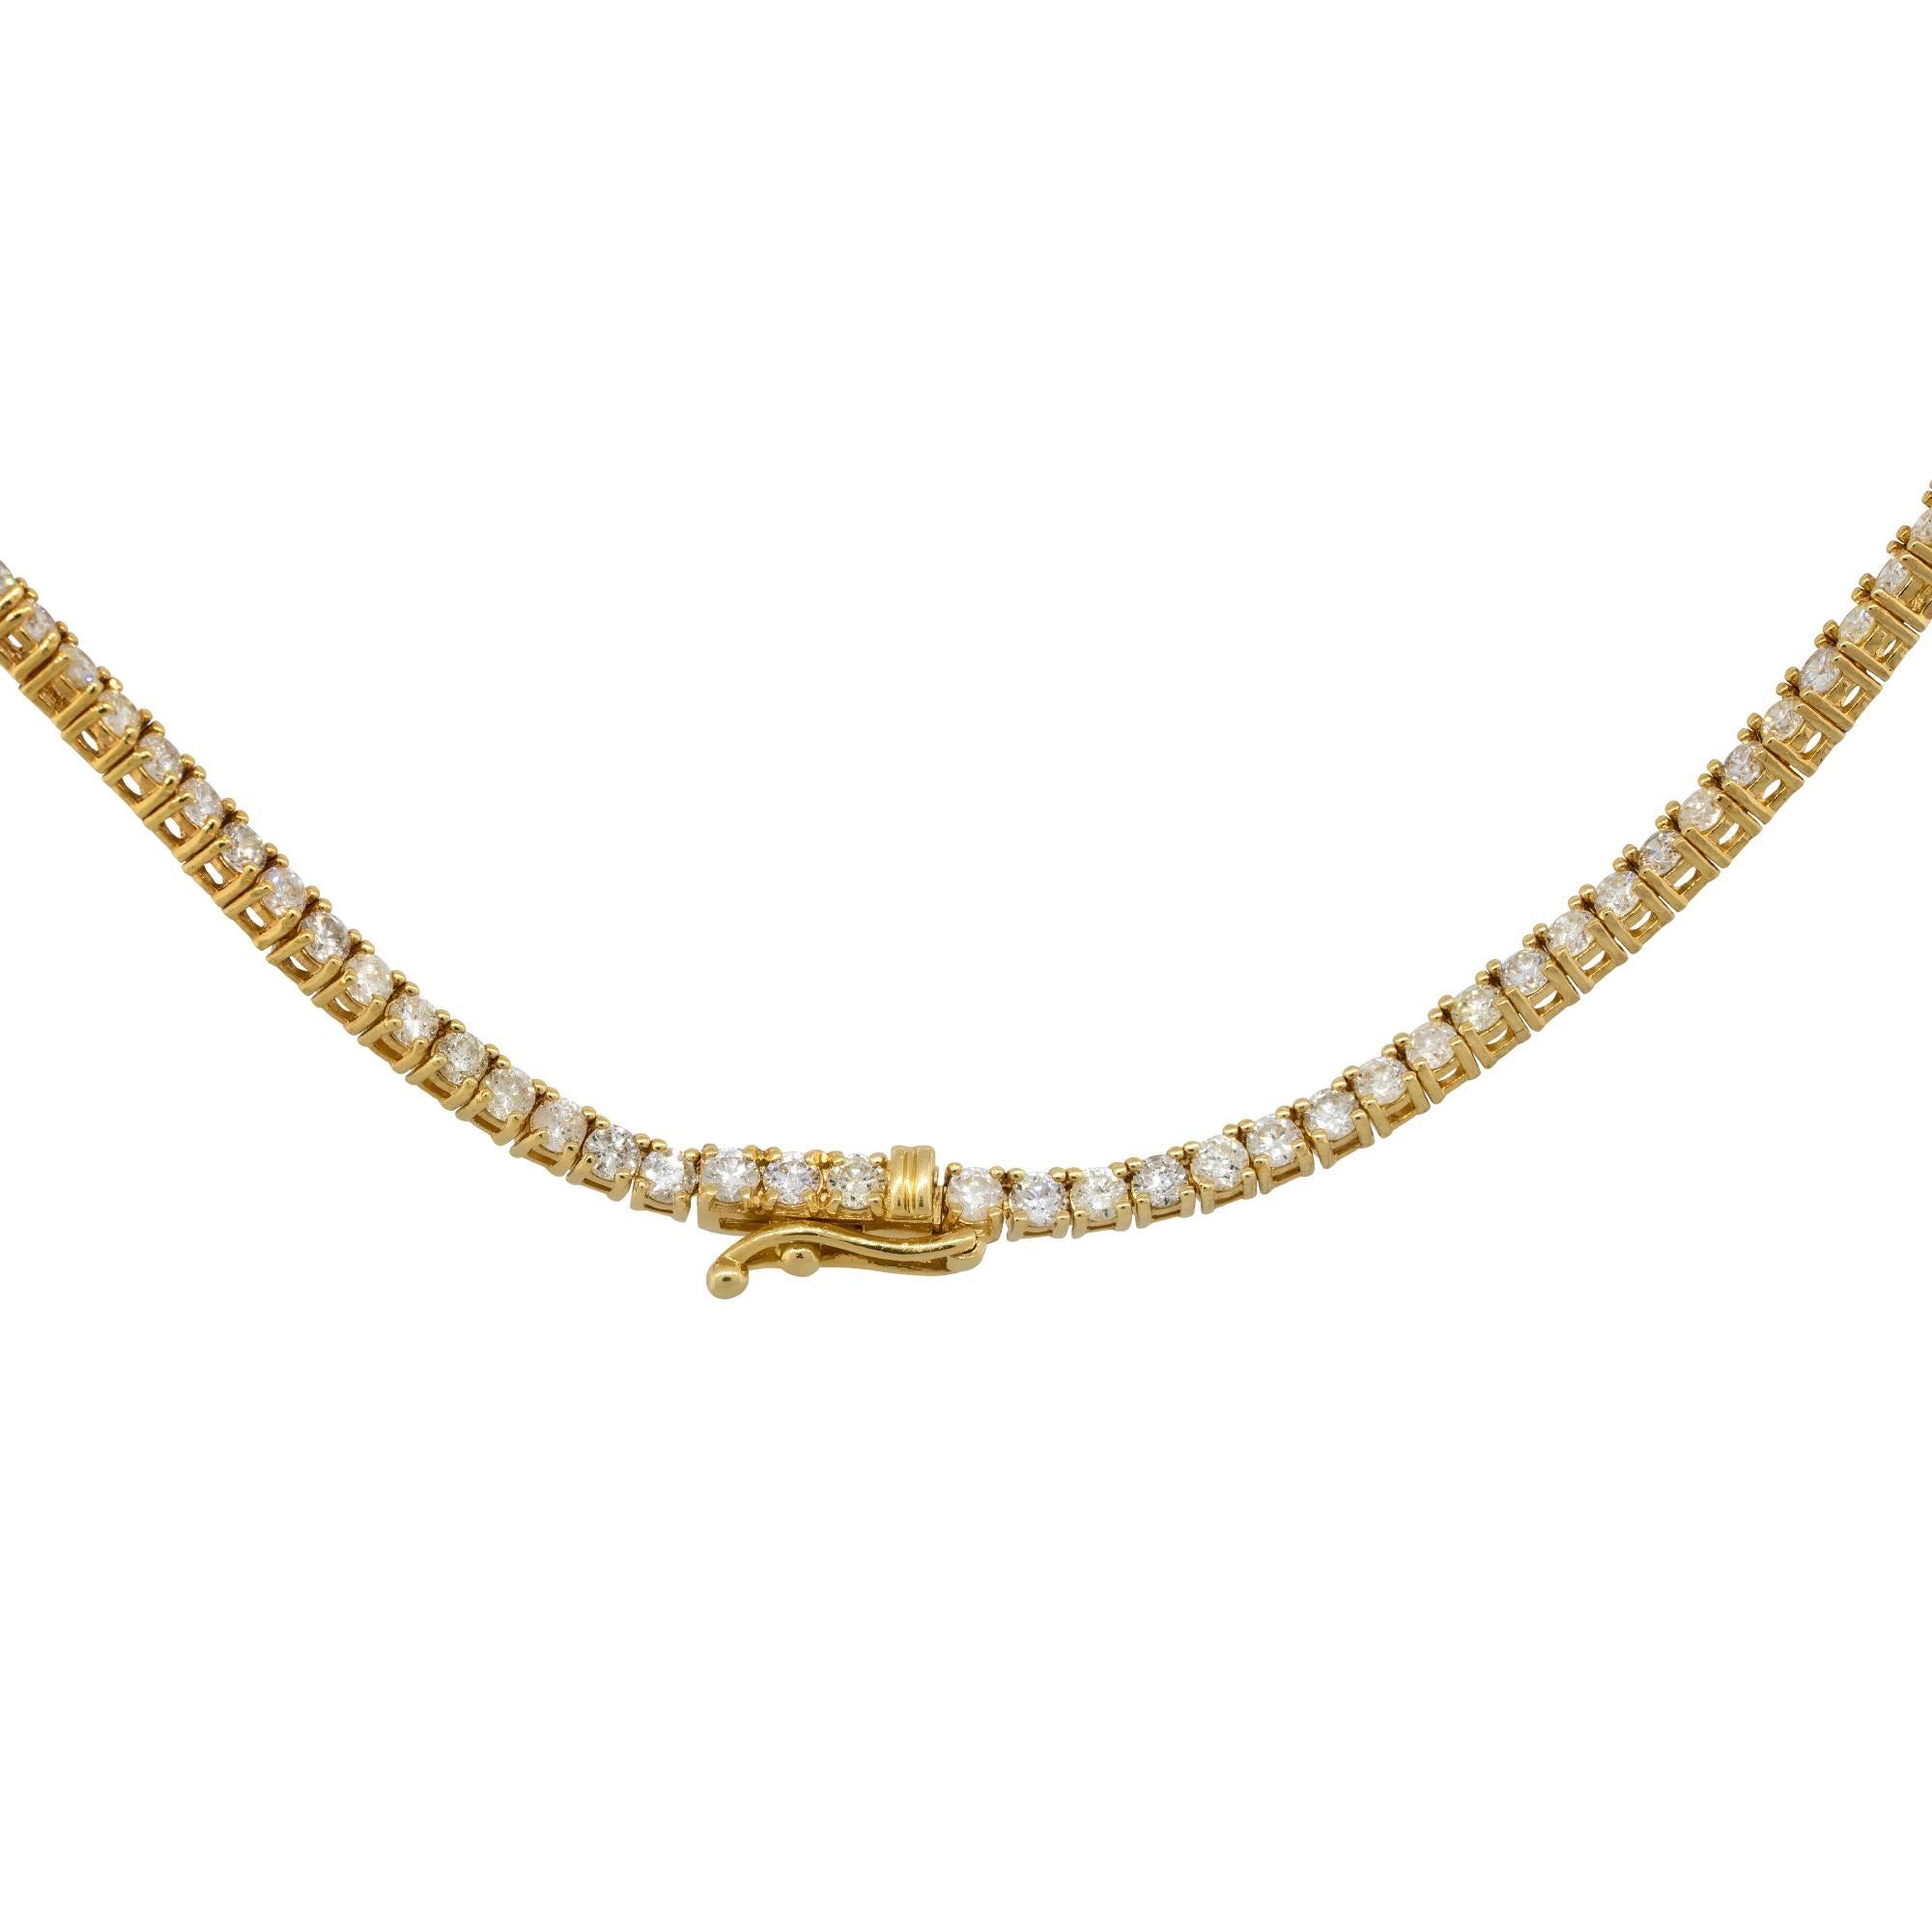 Round Cut 9.66 Carat Diamond Tennis Chain Necklace 14 Karat in Stock